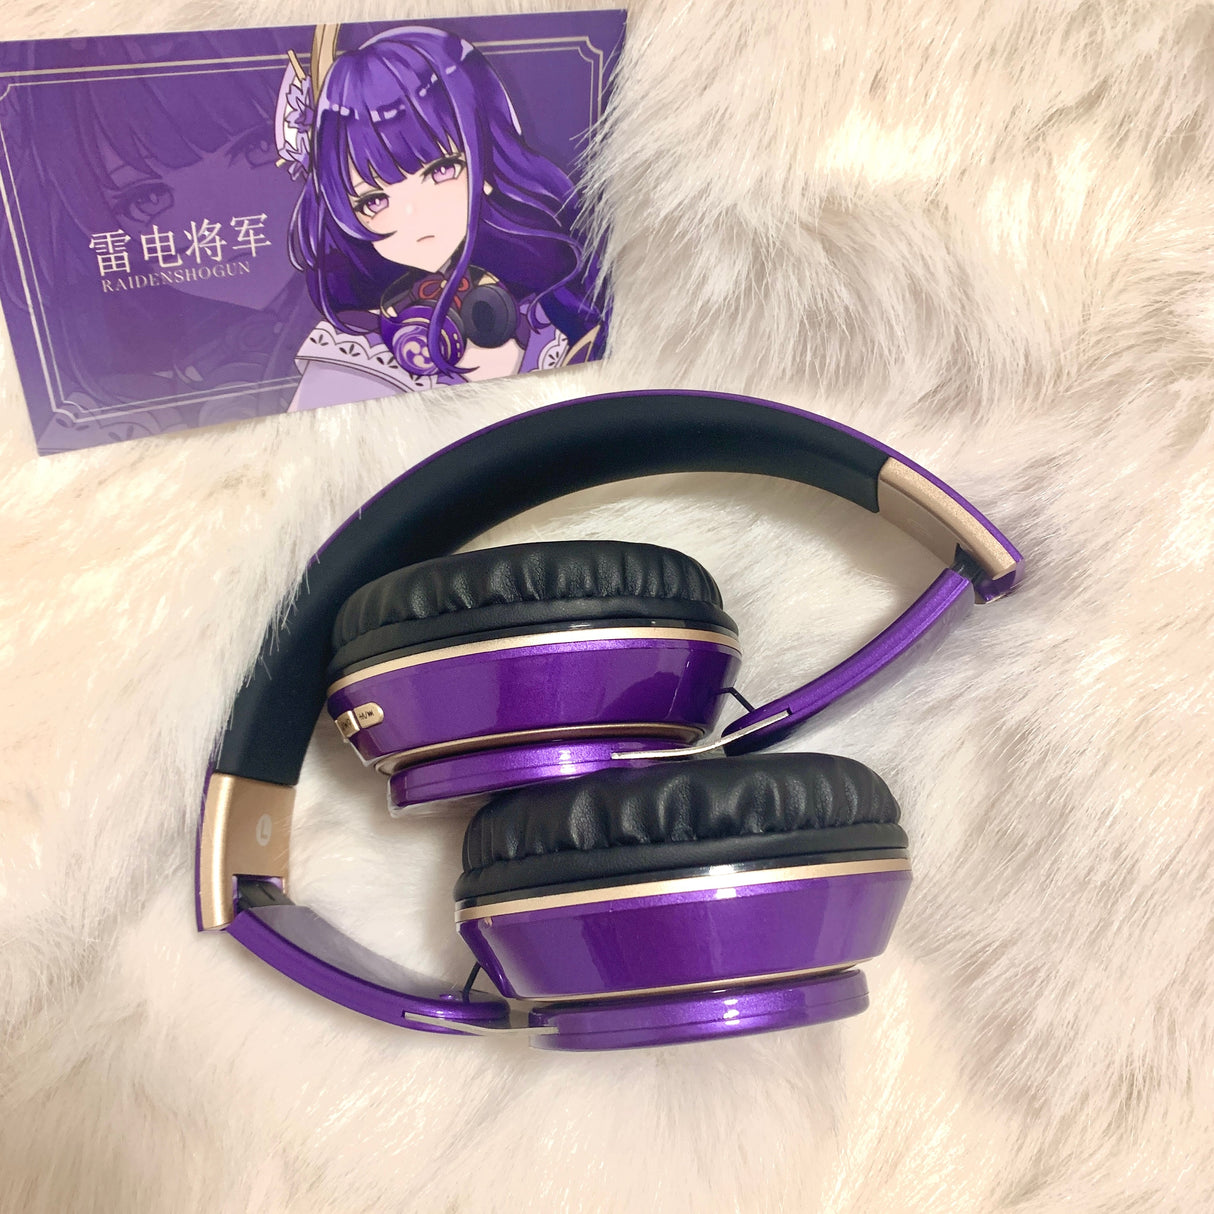 Genshin Impact Magic Theme Wireless Headphones